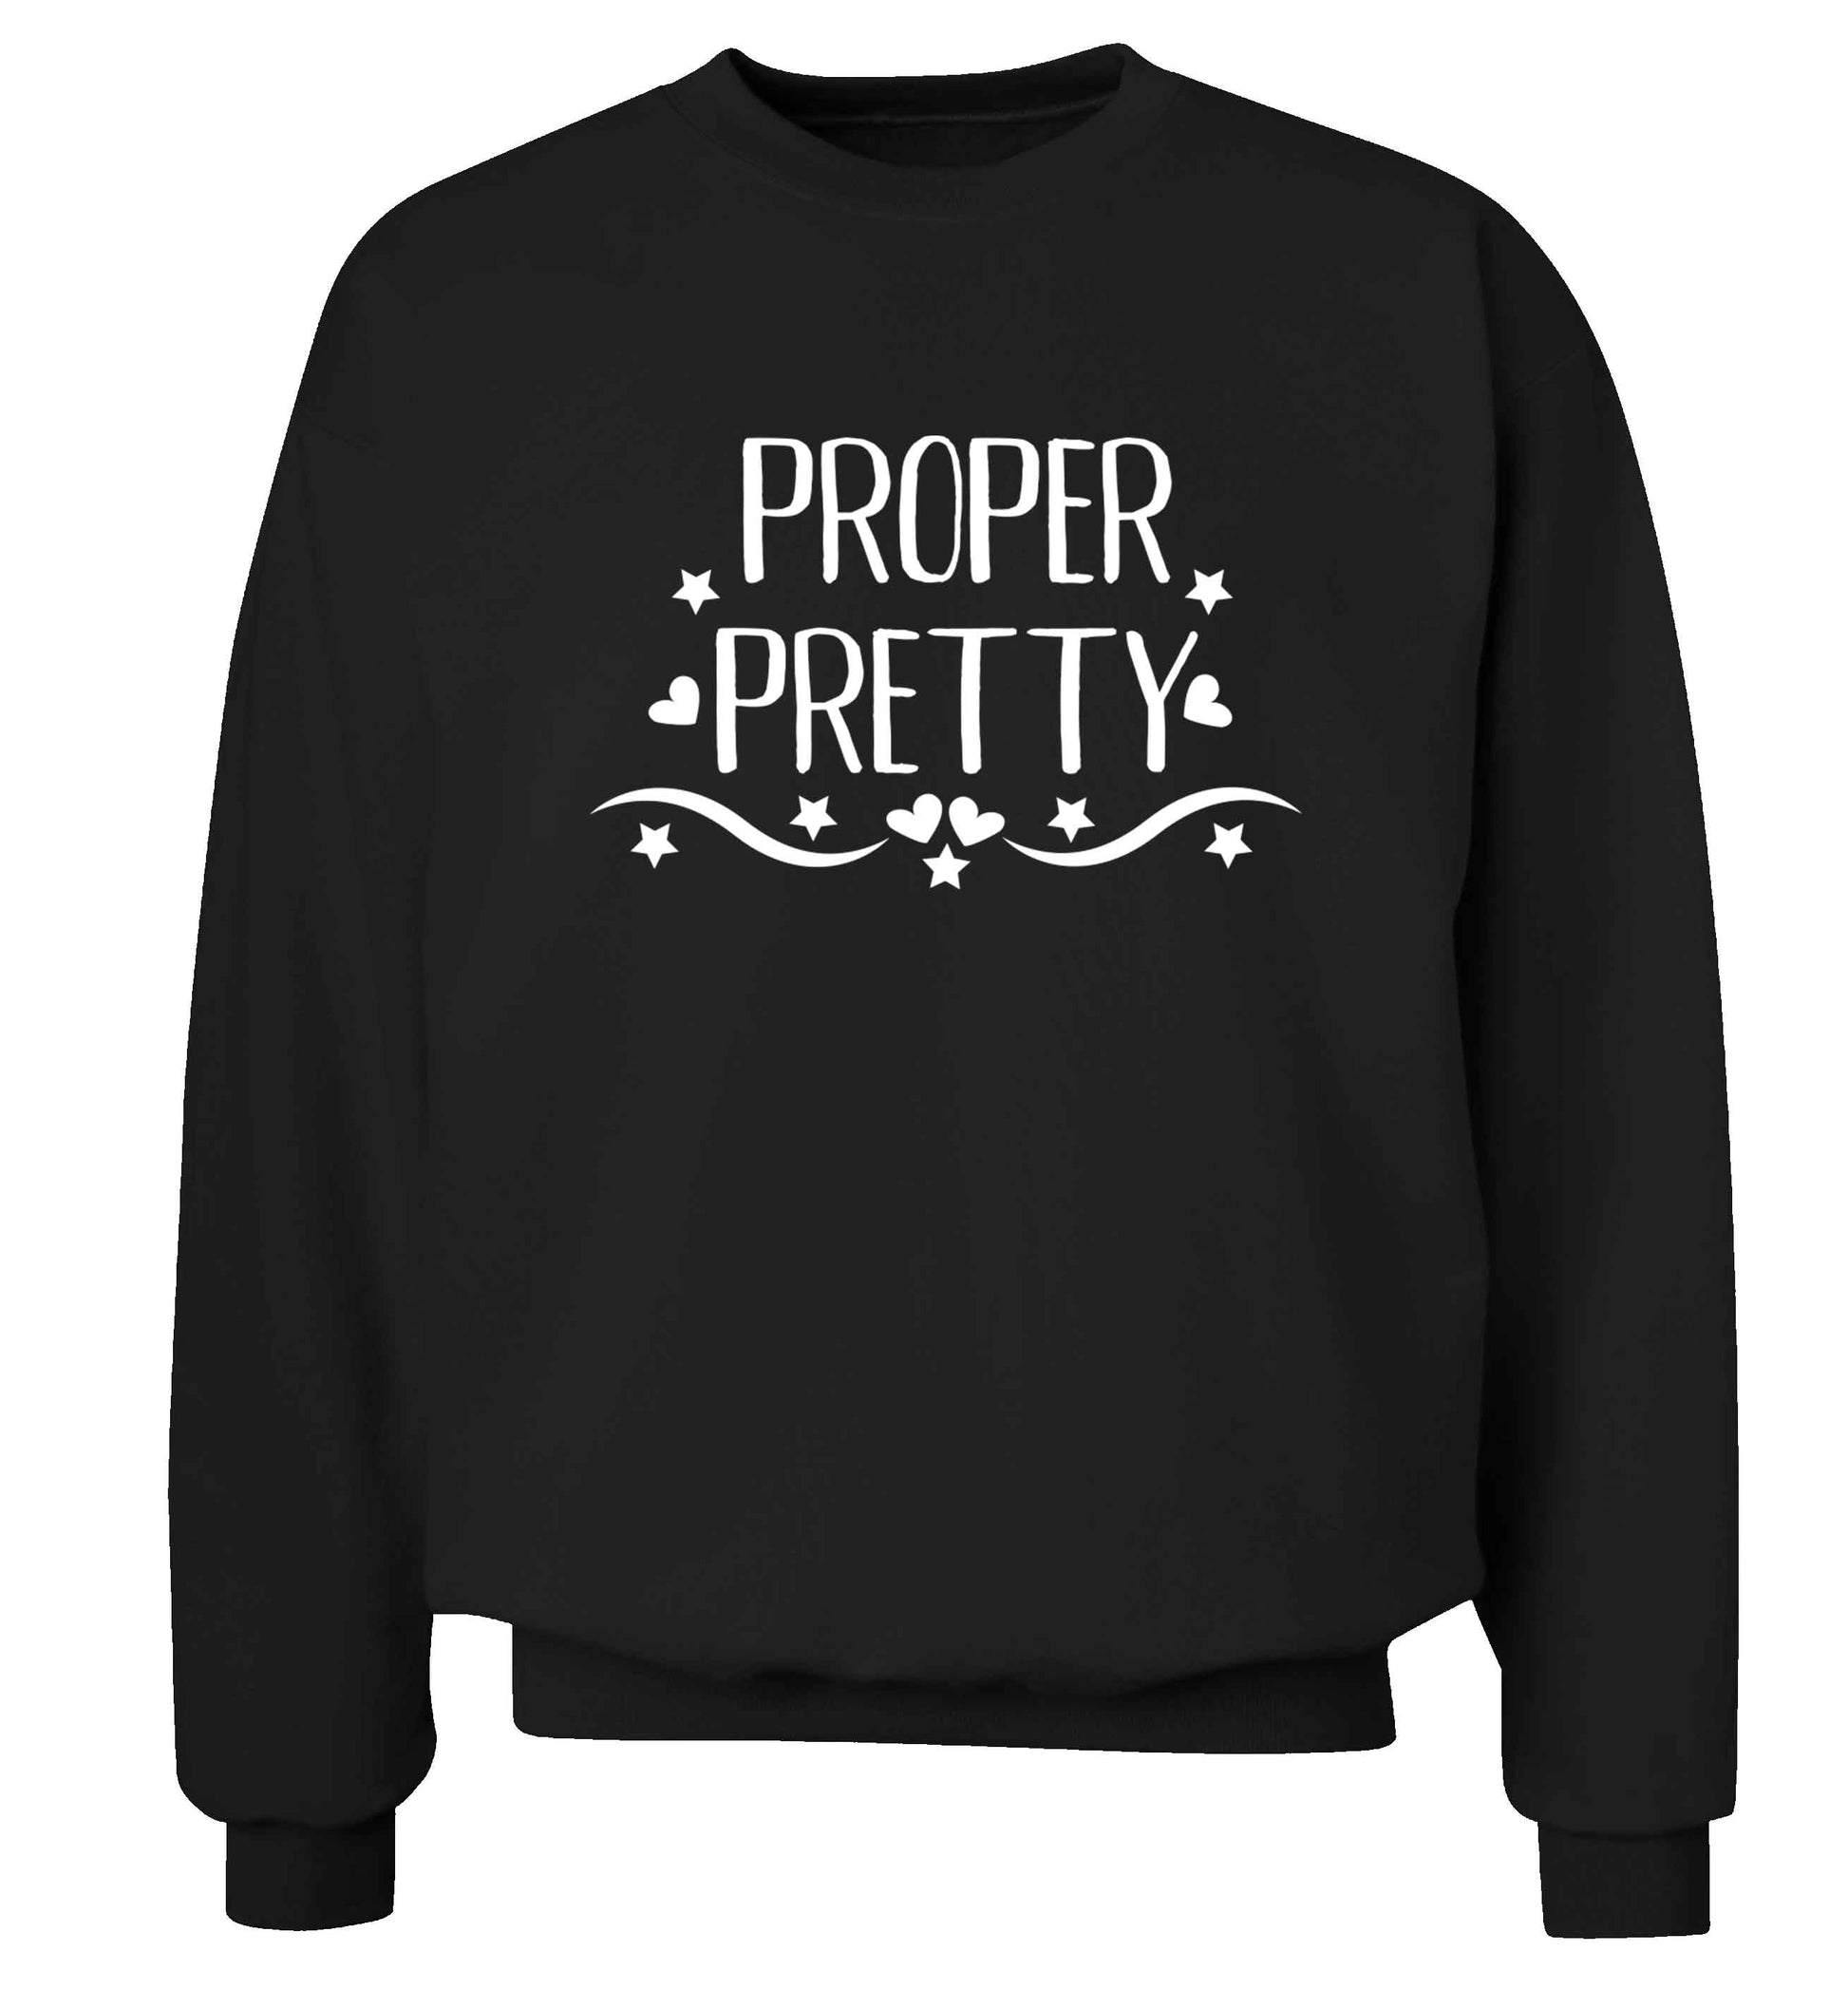 Proper pretty Adult's unisex black Sweater 2XL